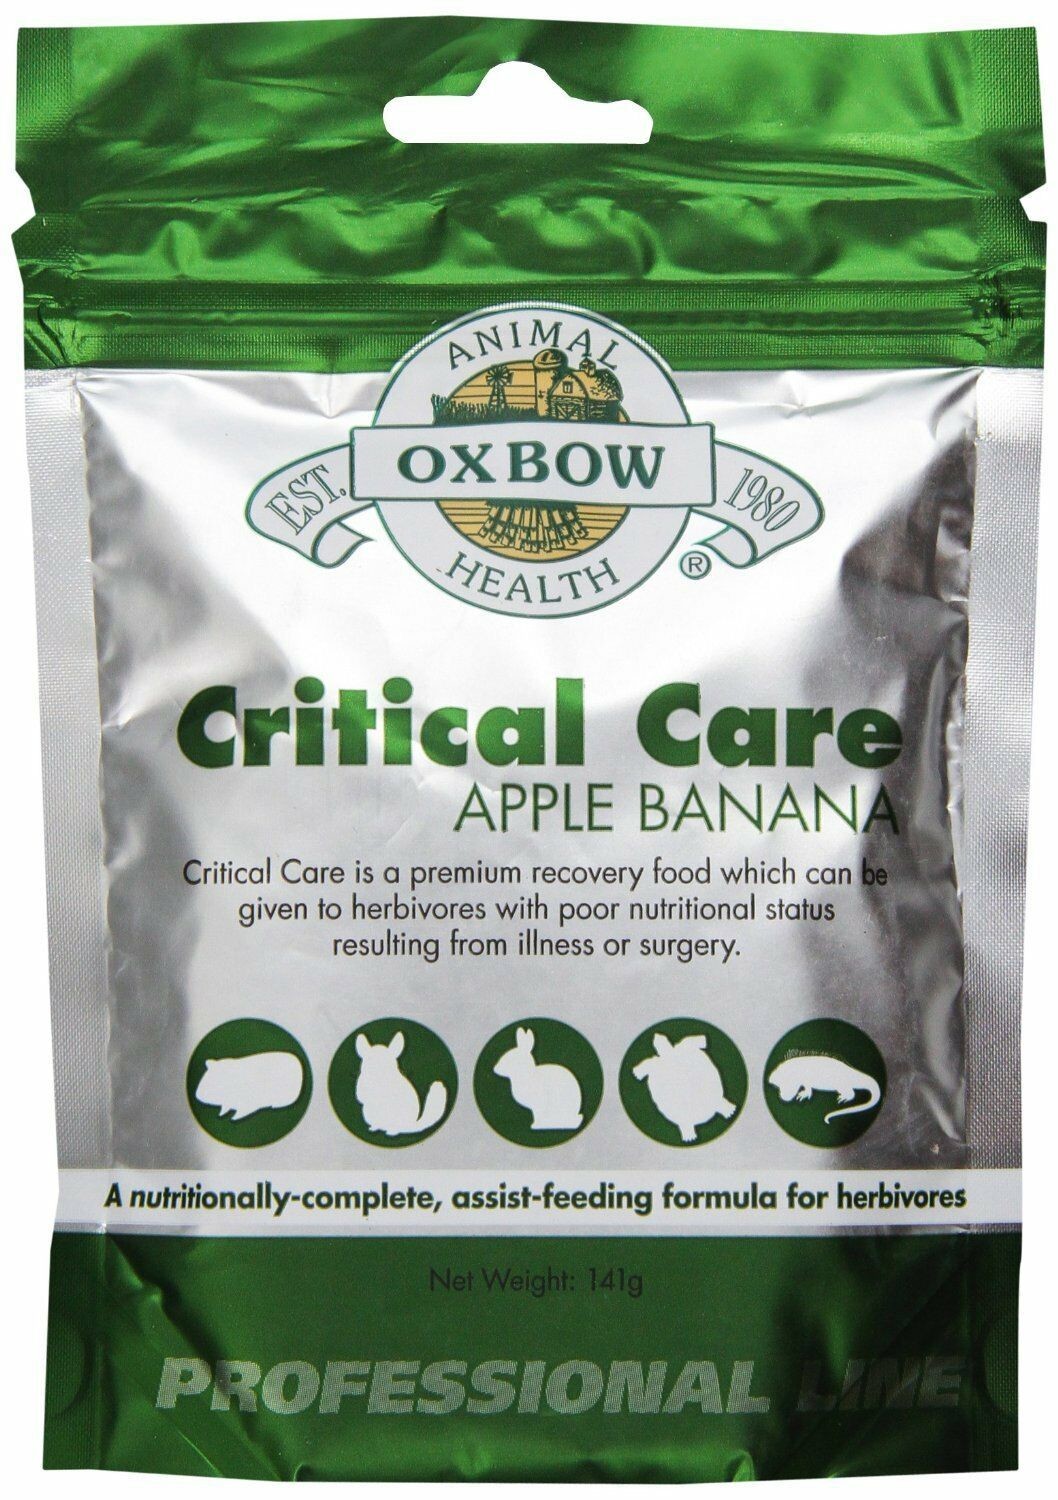 Oxbow Critical Care - Apple Banana